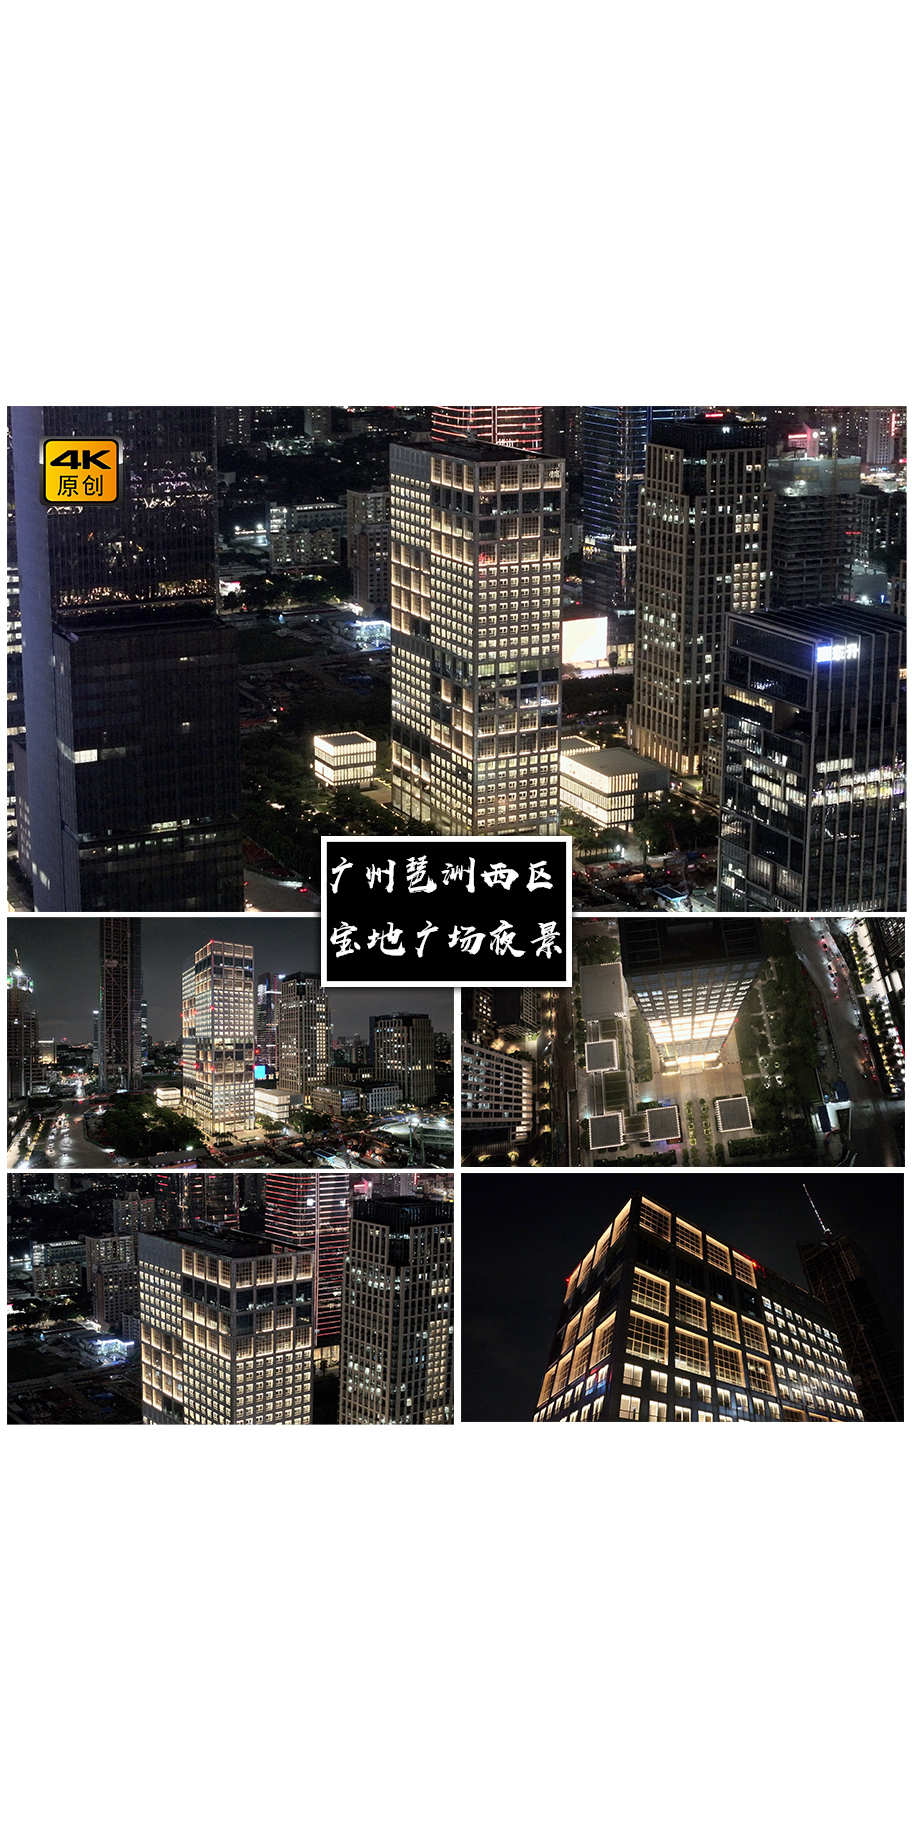 4K高清 | 广州宝地广场夜景航拍合集